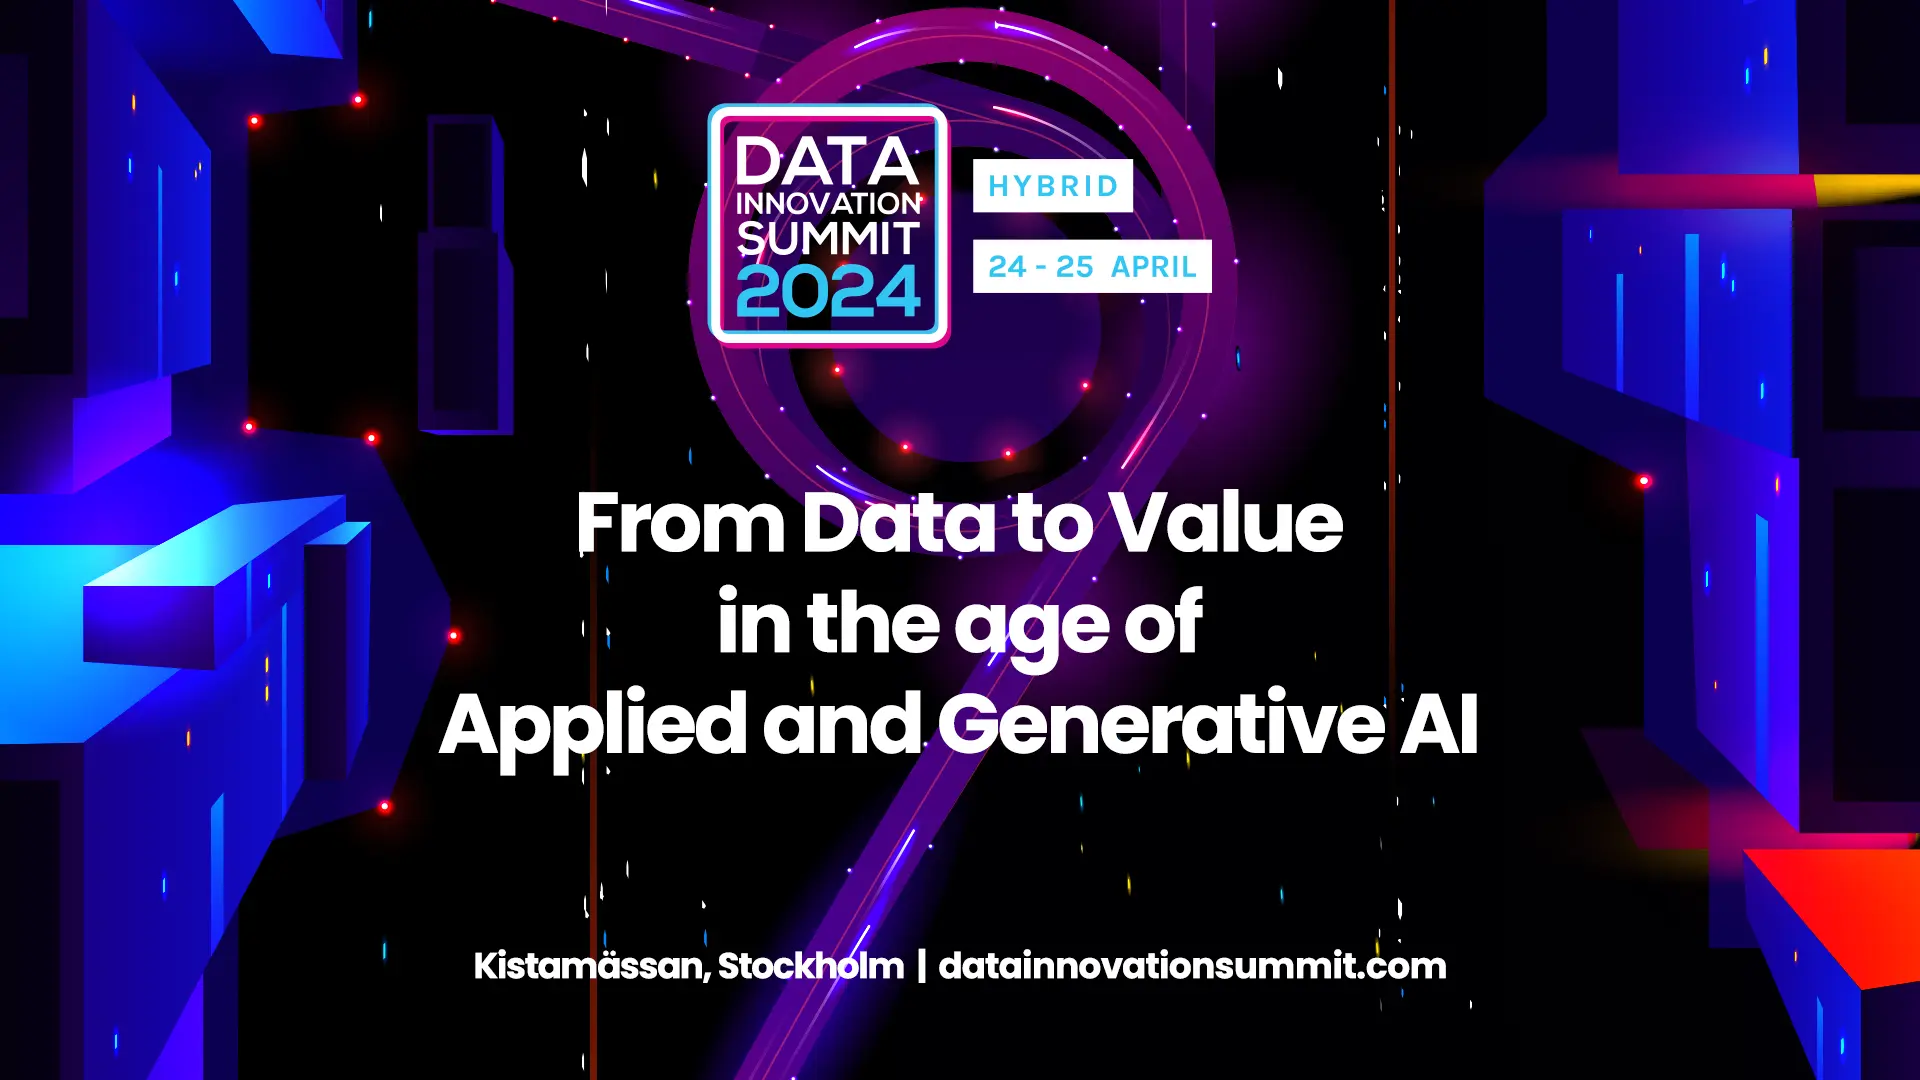 Data Innovation Summit 2024 Hyperight